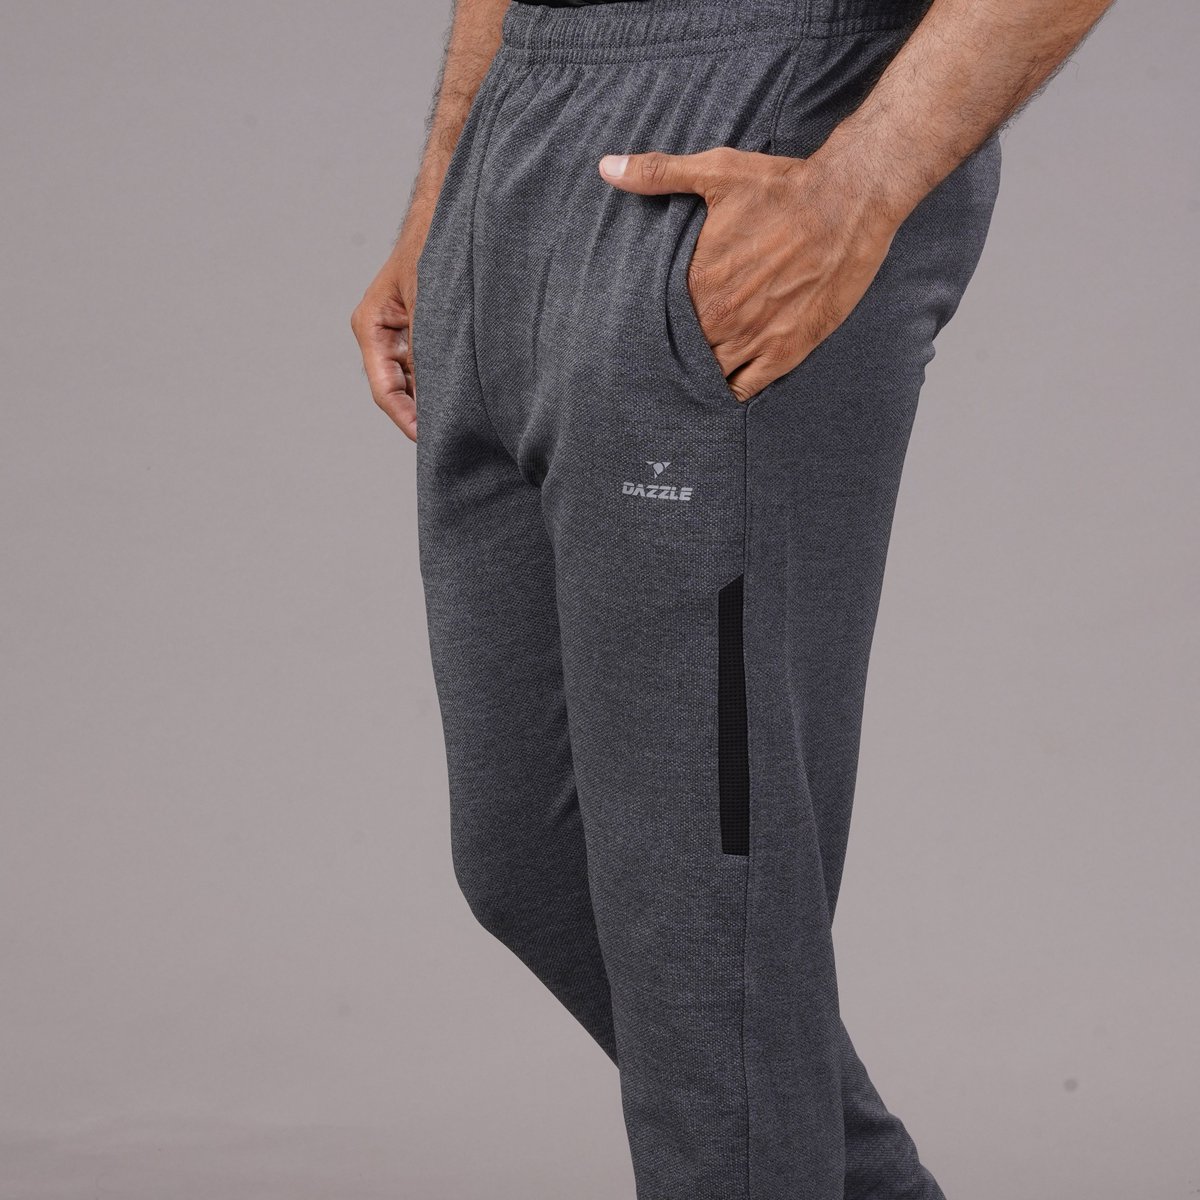 Melange (𝗠𝗶𝘅𝘁𝘂𝗿𝗲 𝗼𝗳 𝗙𝗮𝗯𝗿𝗶𝗰𝘀) track pants are a versatile and comfortable choice for everyday wear.

𝗦𝗵𝗼𝗽 𝗻𝗼𝘄: shorturl.at/l43uE

#DazzleSportsWear #MixtureOfFabrics #Melange #onlinestore #Activewear #menswear #TrackpantsOnline #BottomWear #apparel